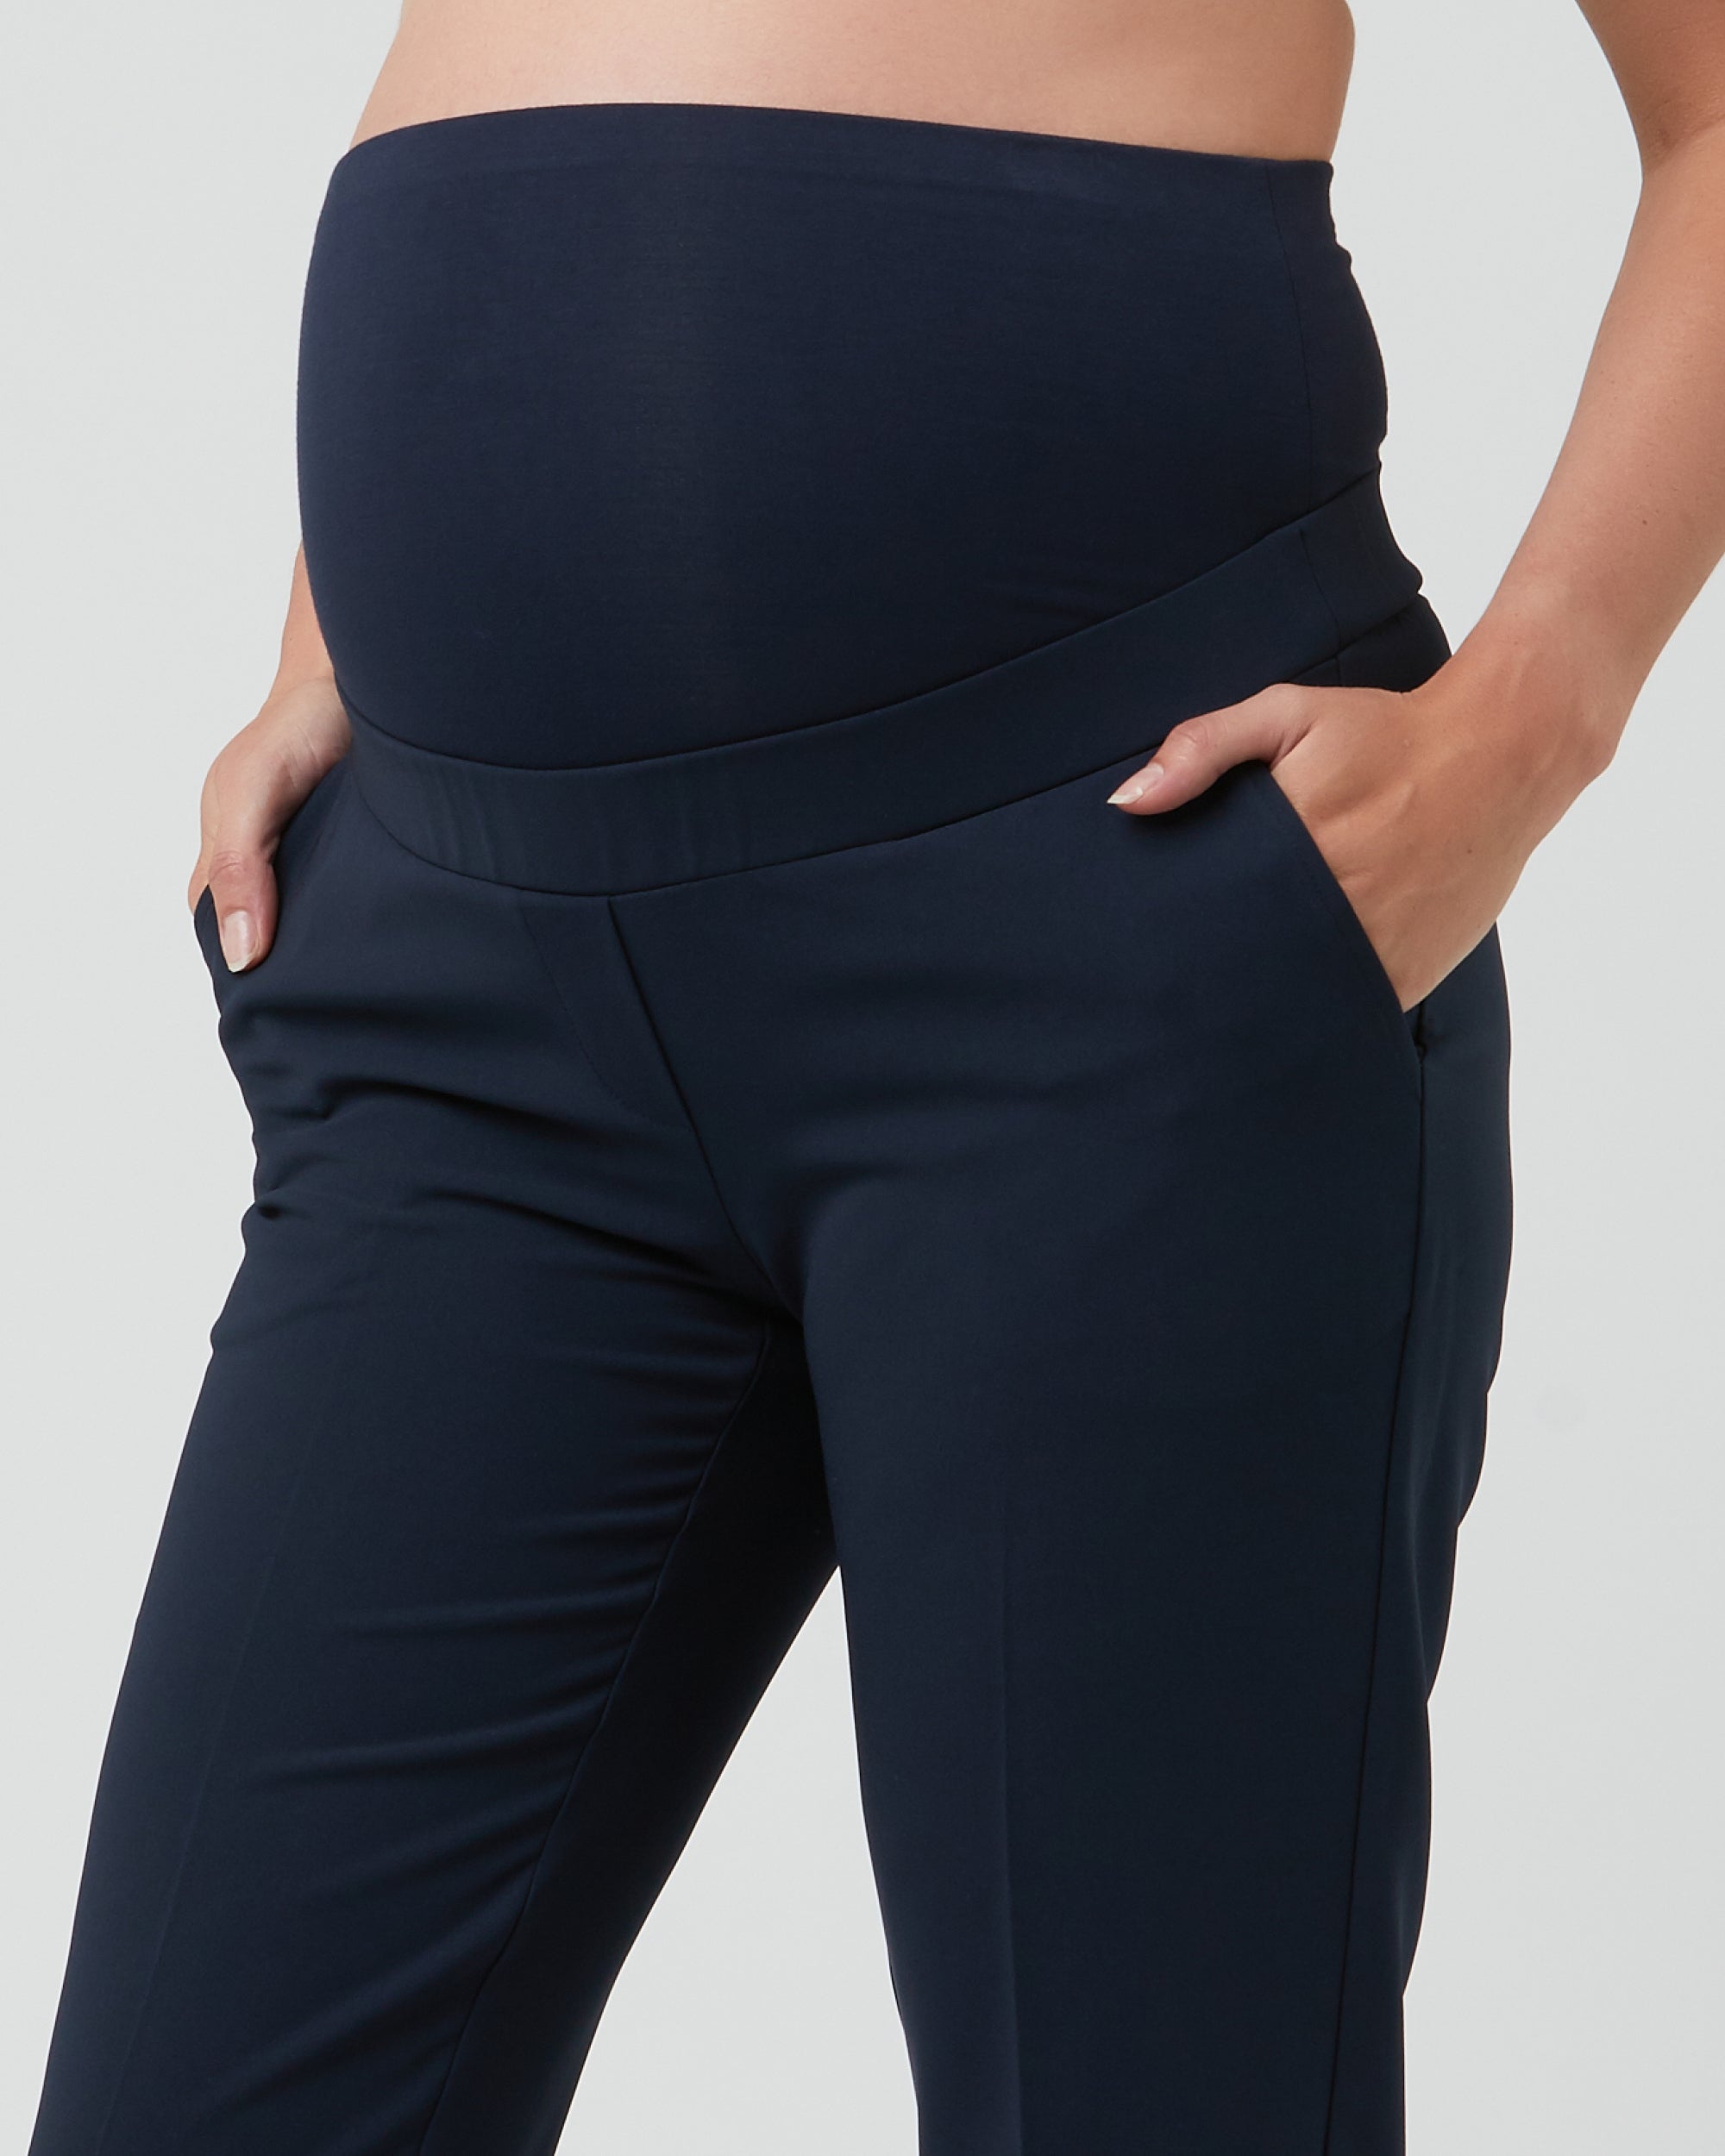 Buy AMPOSH Womens Maternity Capri Pants Stretchy Lounge Pants Comfortable  Pregnancy ShortsBlack Floral S at Amazonin